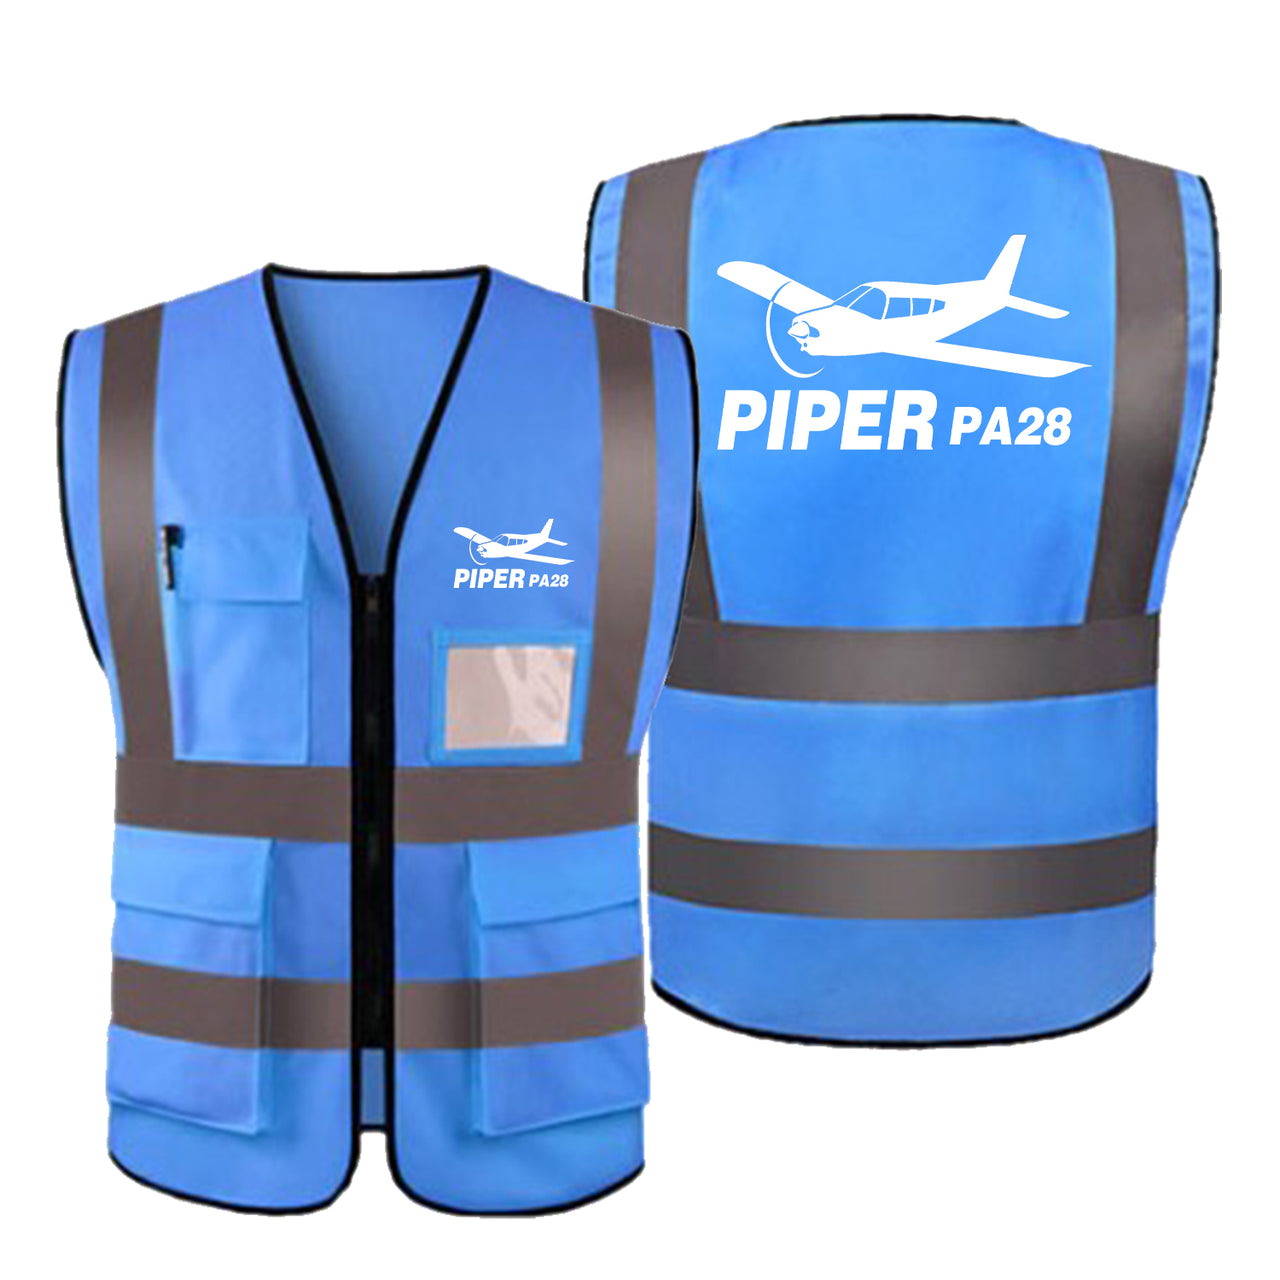 The Piper PA28 Designed Reflective Vests